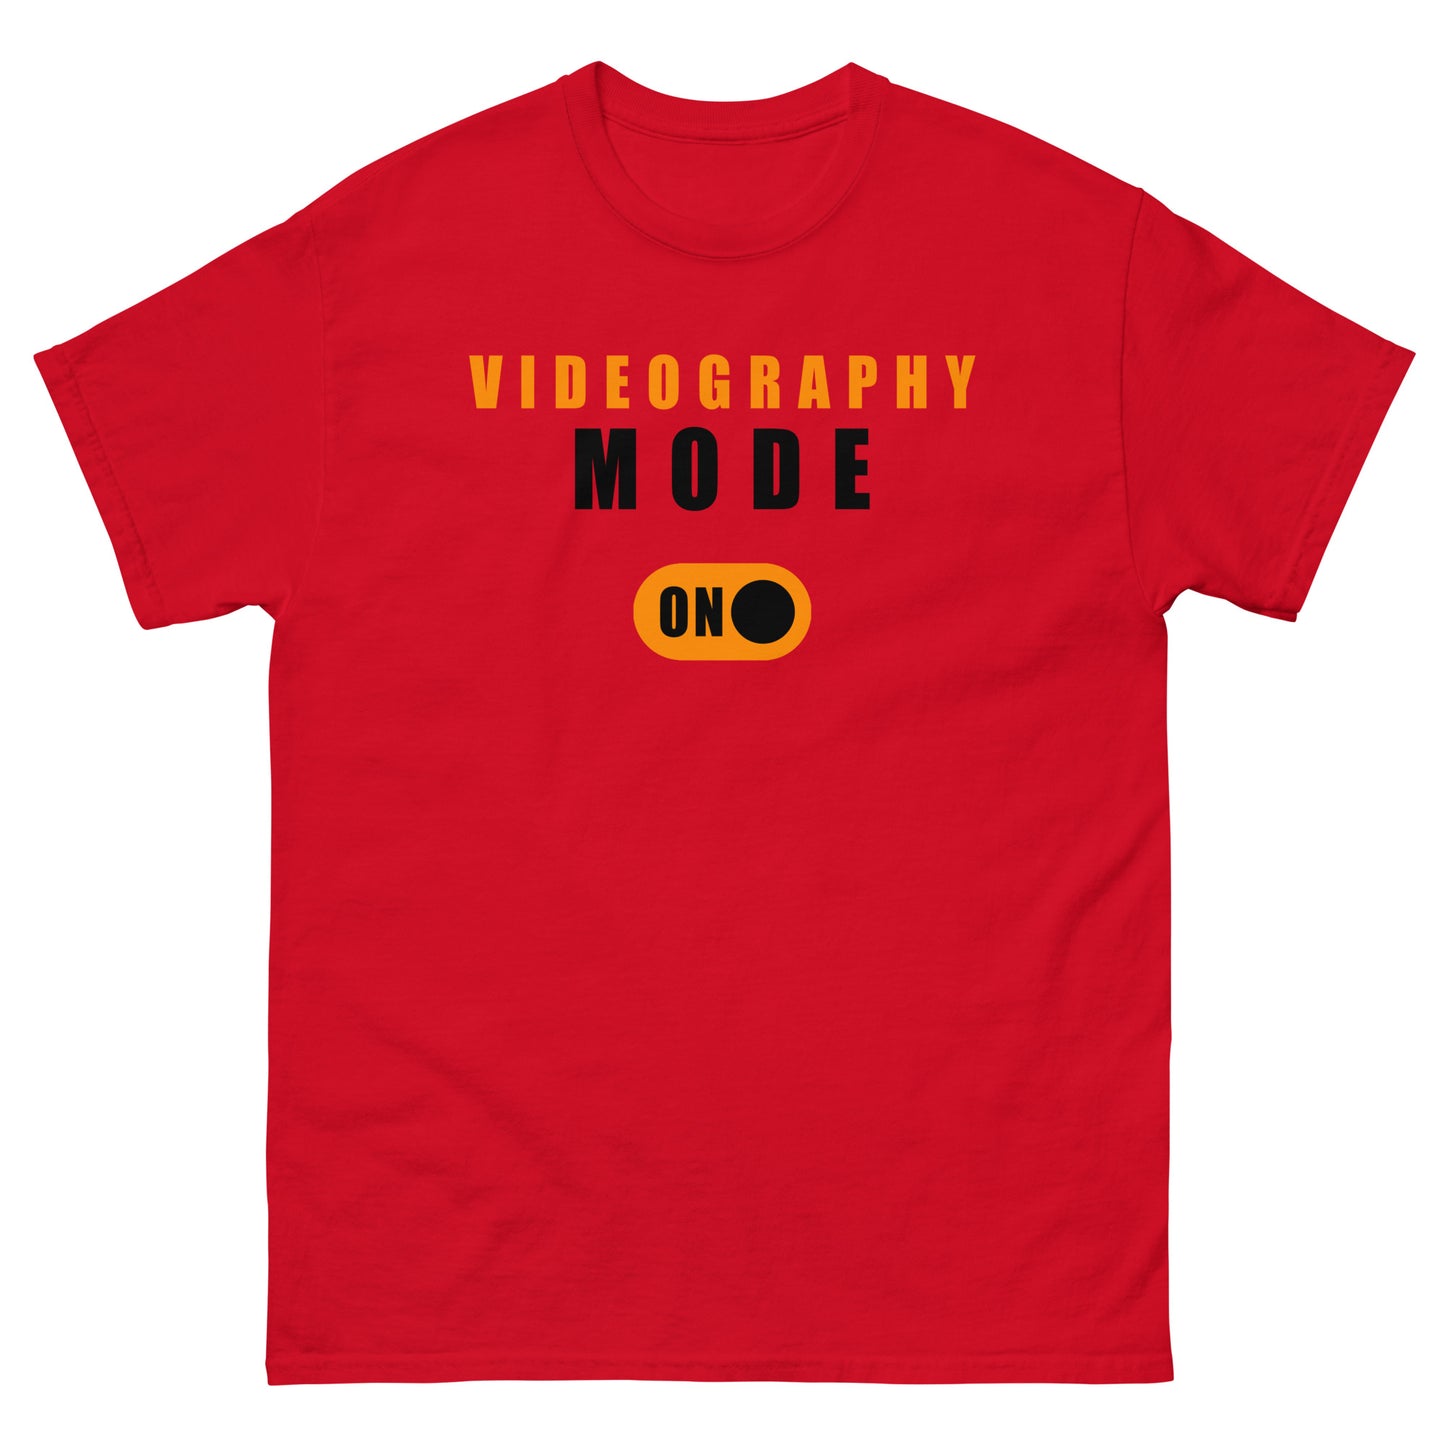 T-shirt da uomo - Modalità video - Logo nero